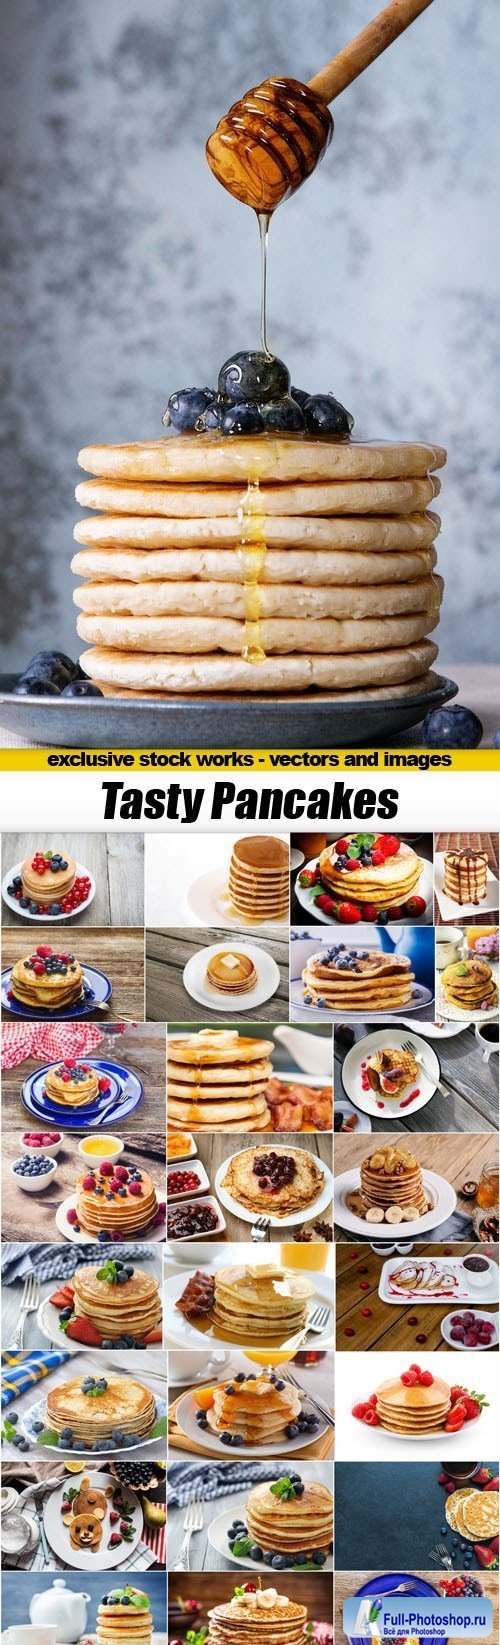 Tasty Pancakes 27xJPG